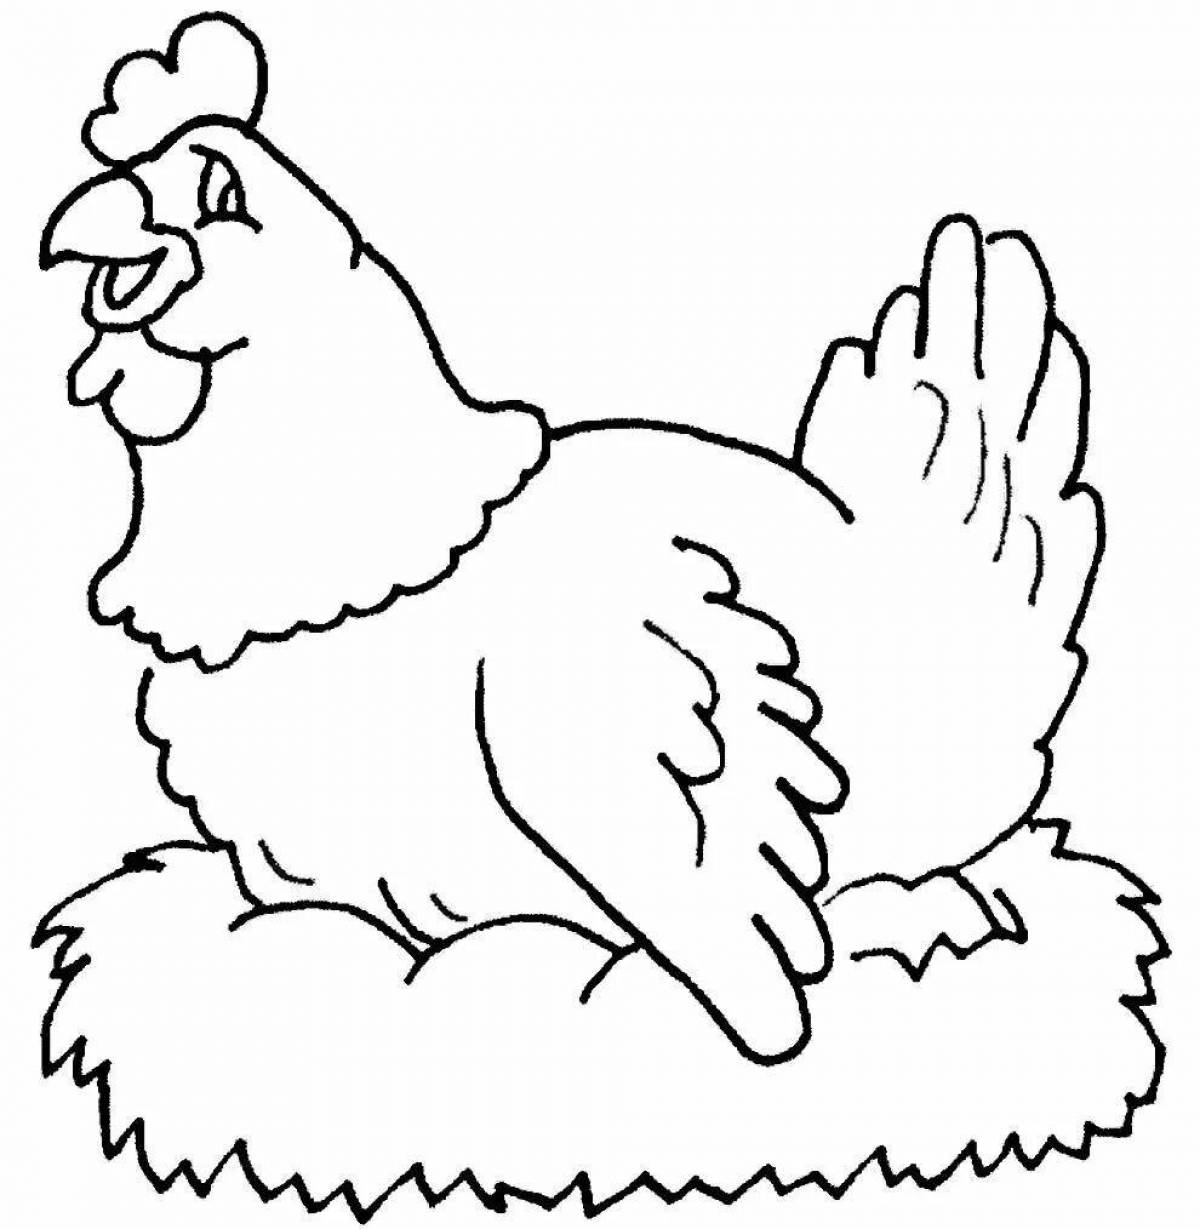 Joyful chicken drawing for kids